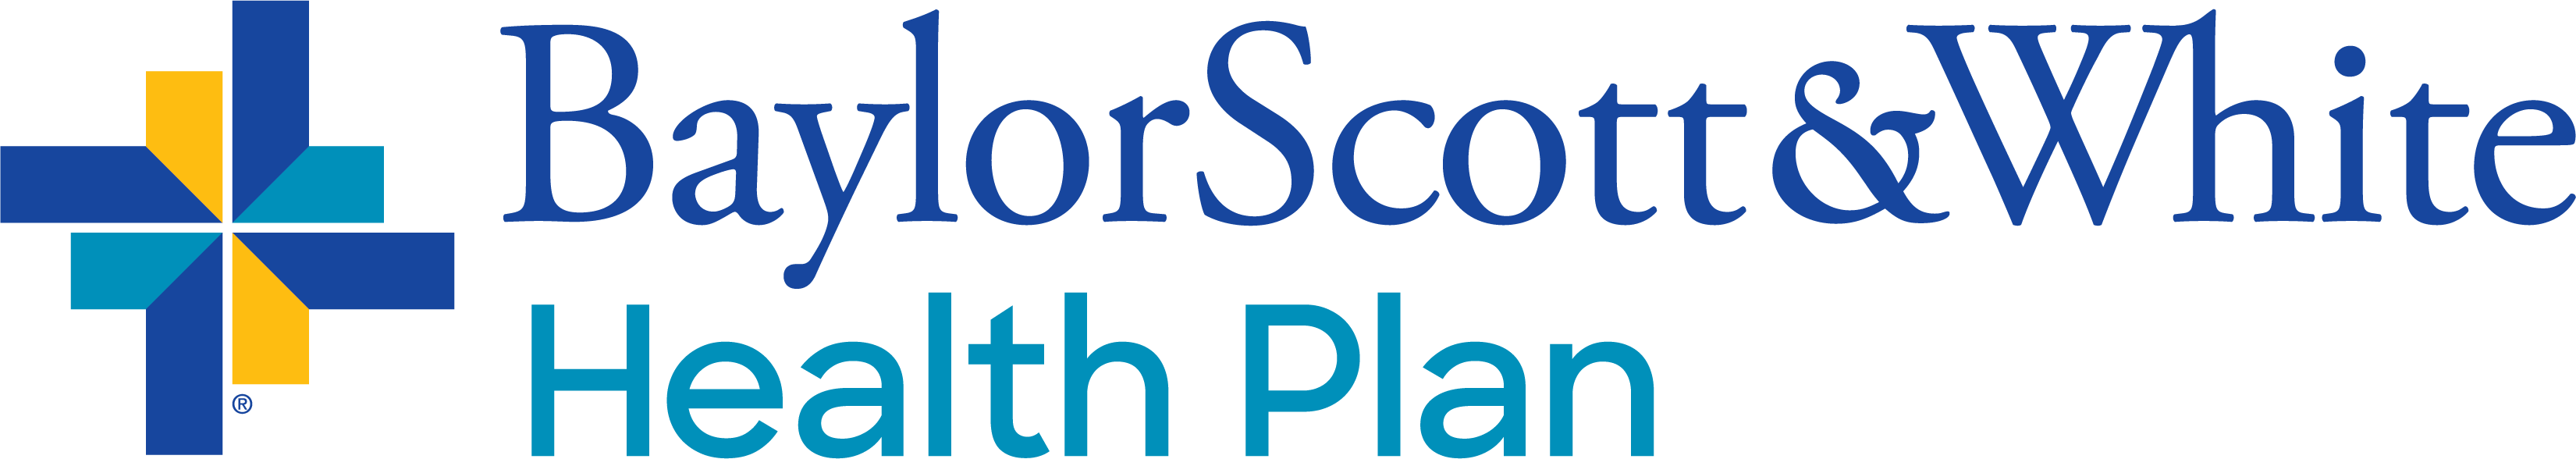 Baylor Scott & White Health Plan/FirstCare